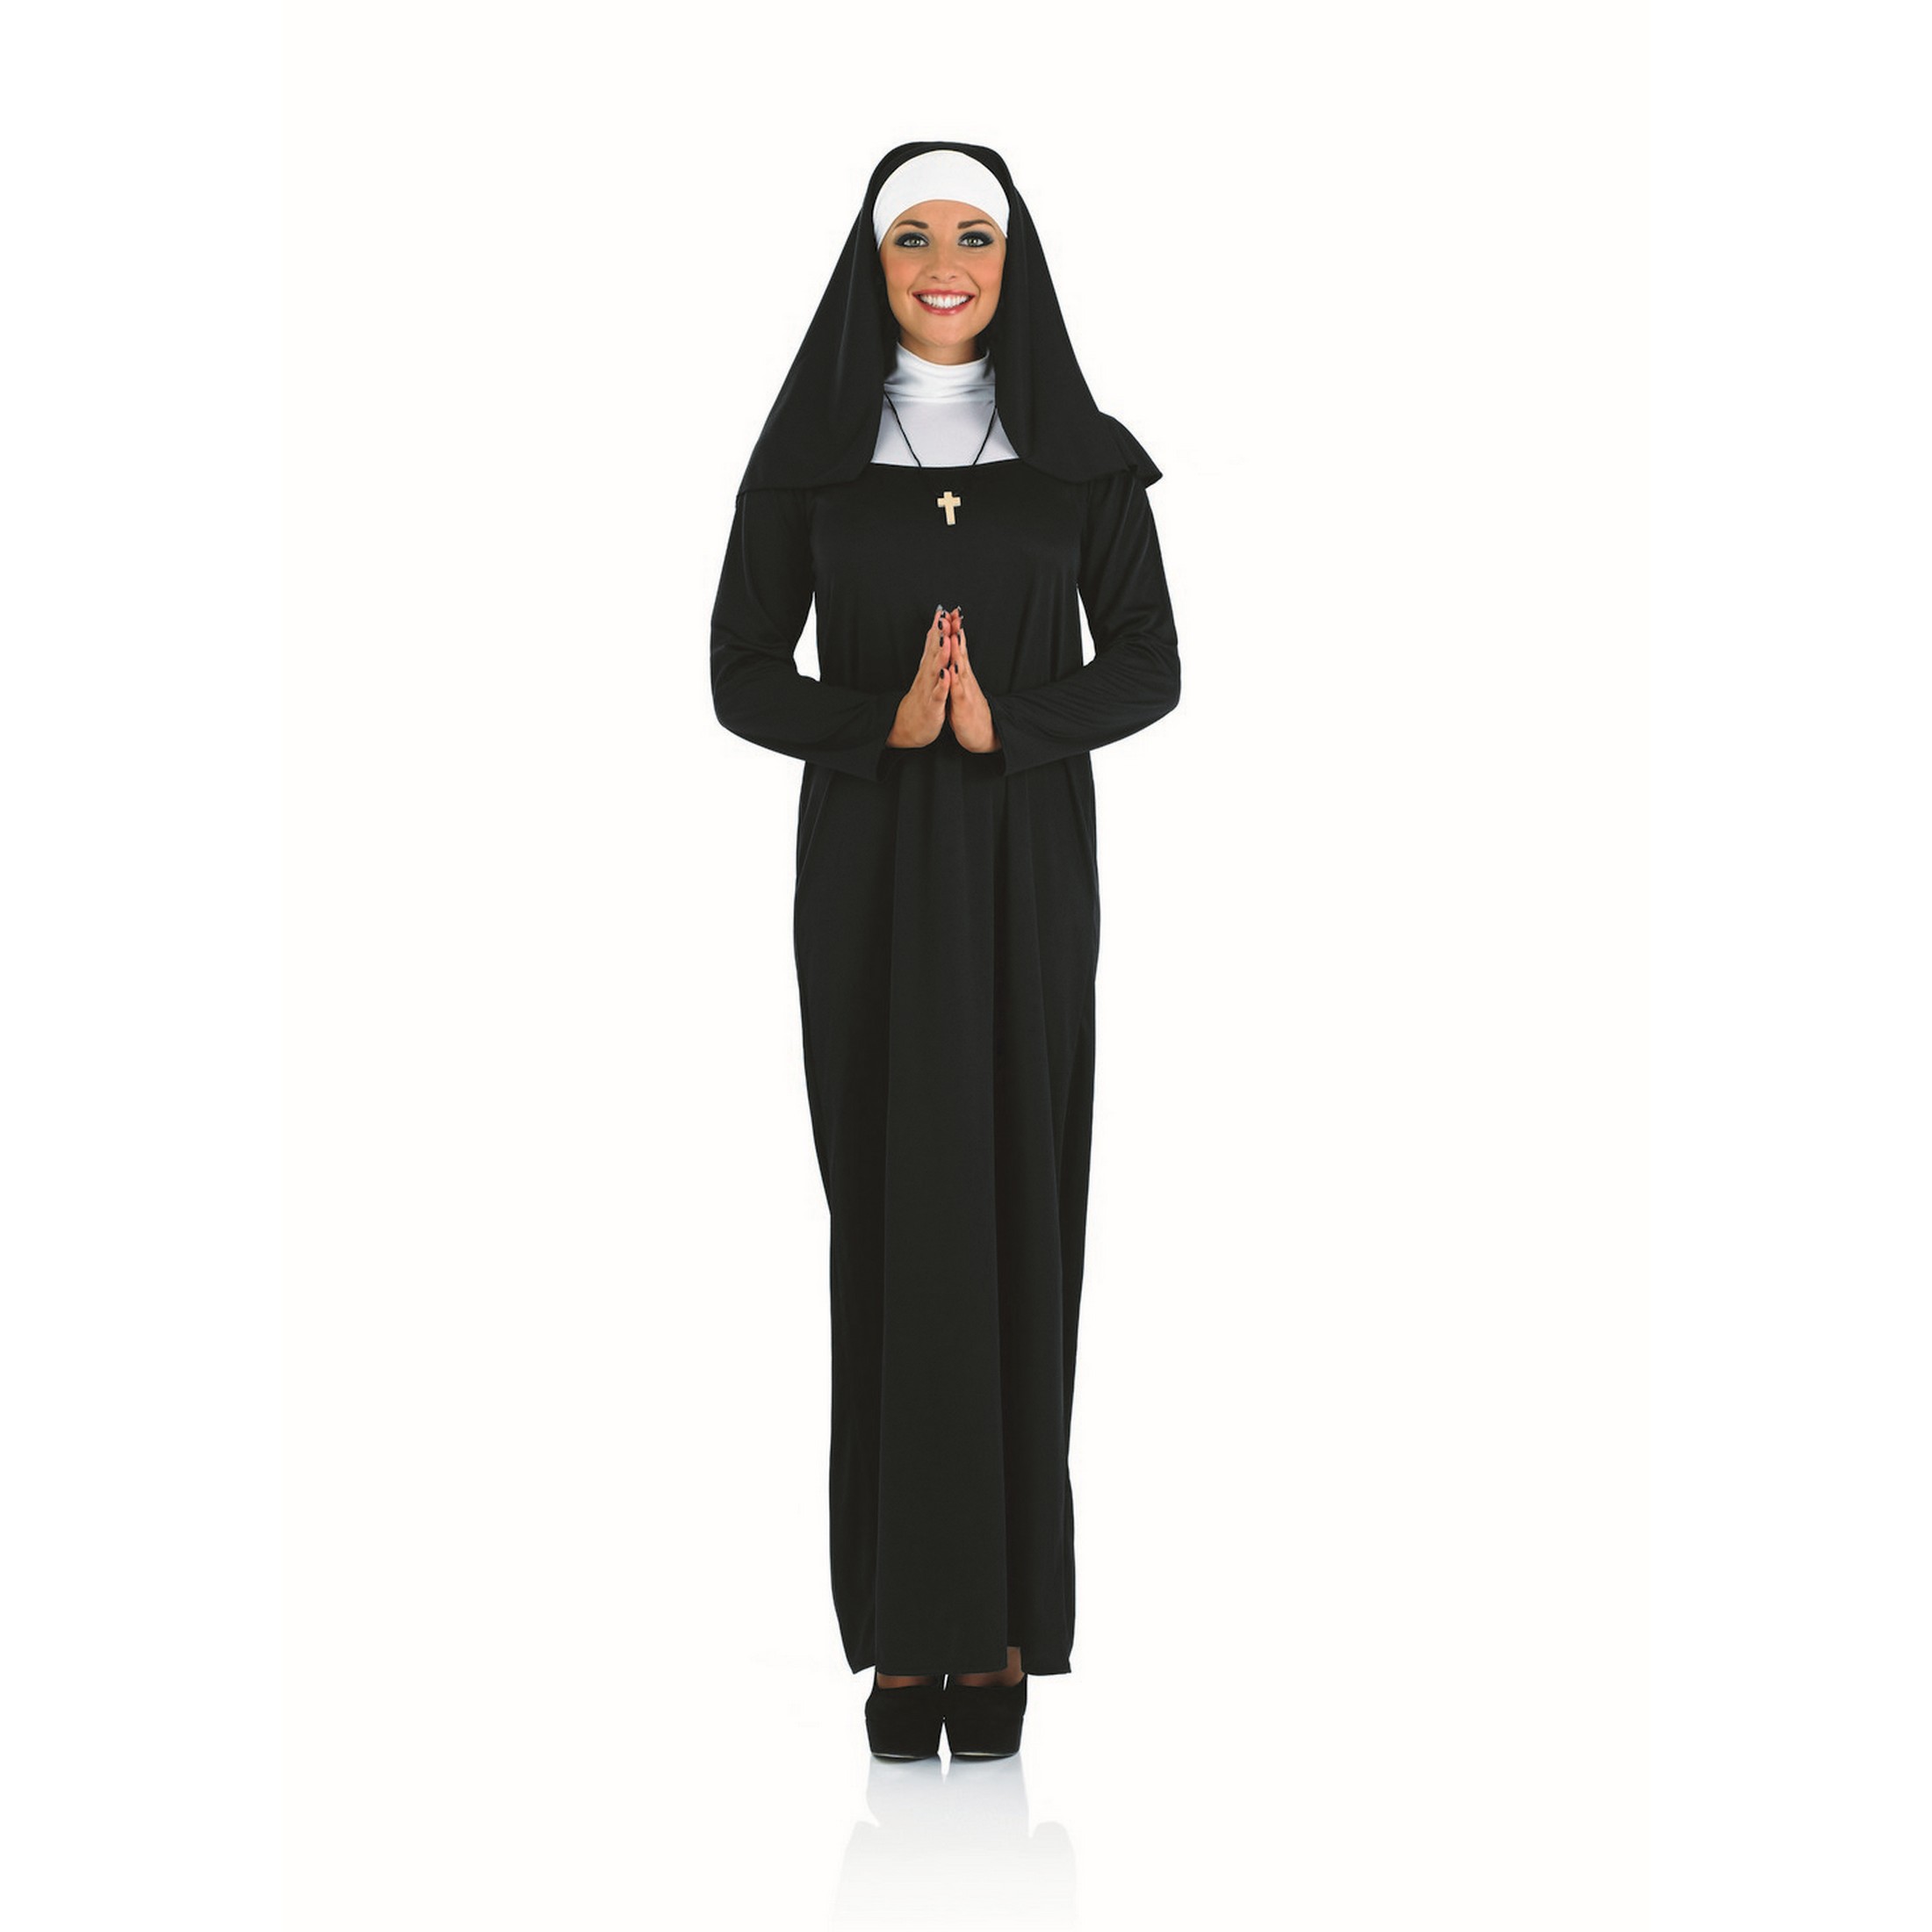 Fun Shack Womens Classic Black Nun Costume Cross Ladies Sister Fancy Dress Halloween Black M - image 2 of 3